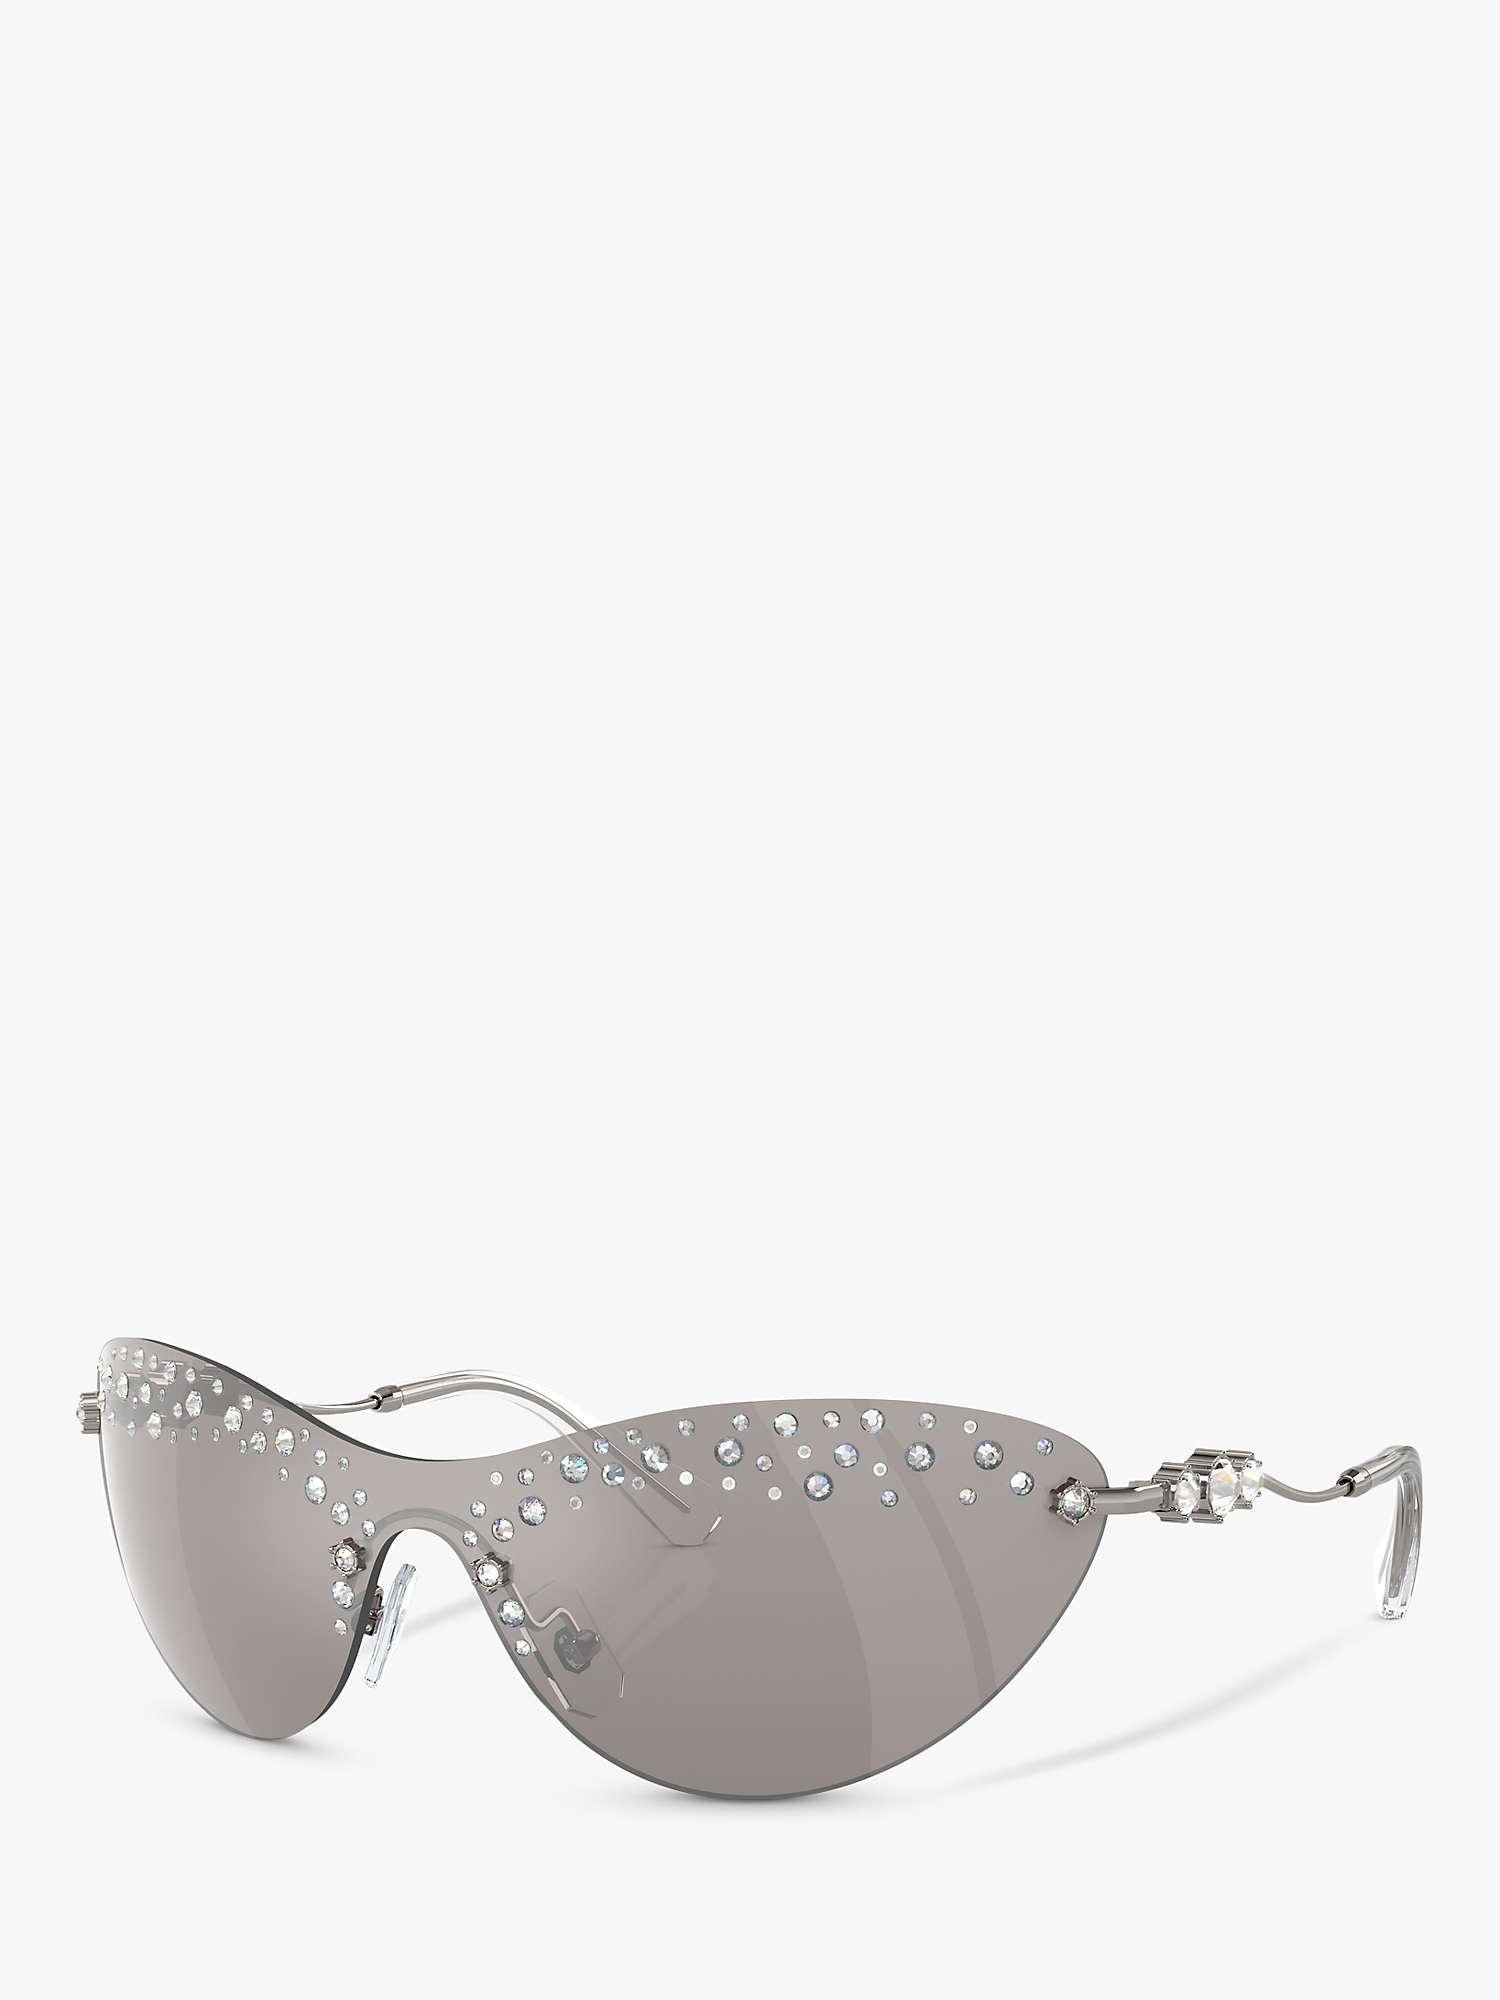 Buy Swarovski SK7023 Women's Wrap Sunglasses Online at johnlewis.com